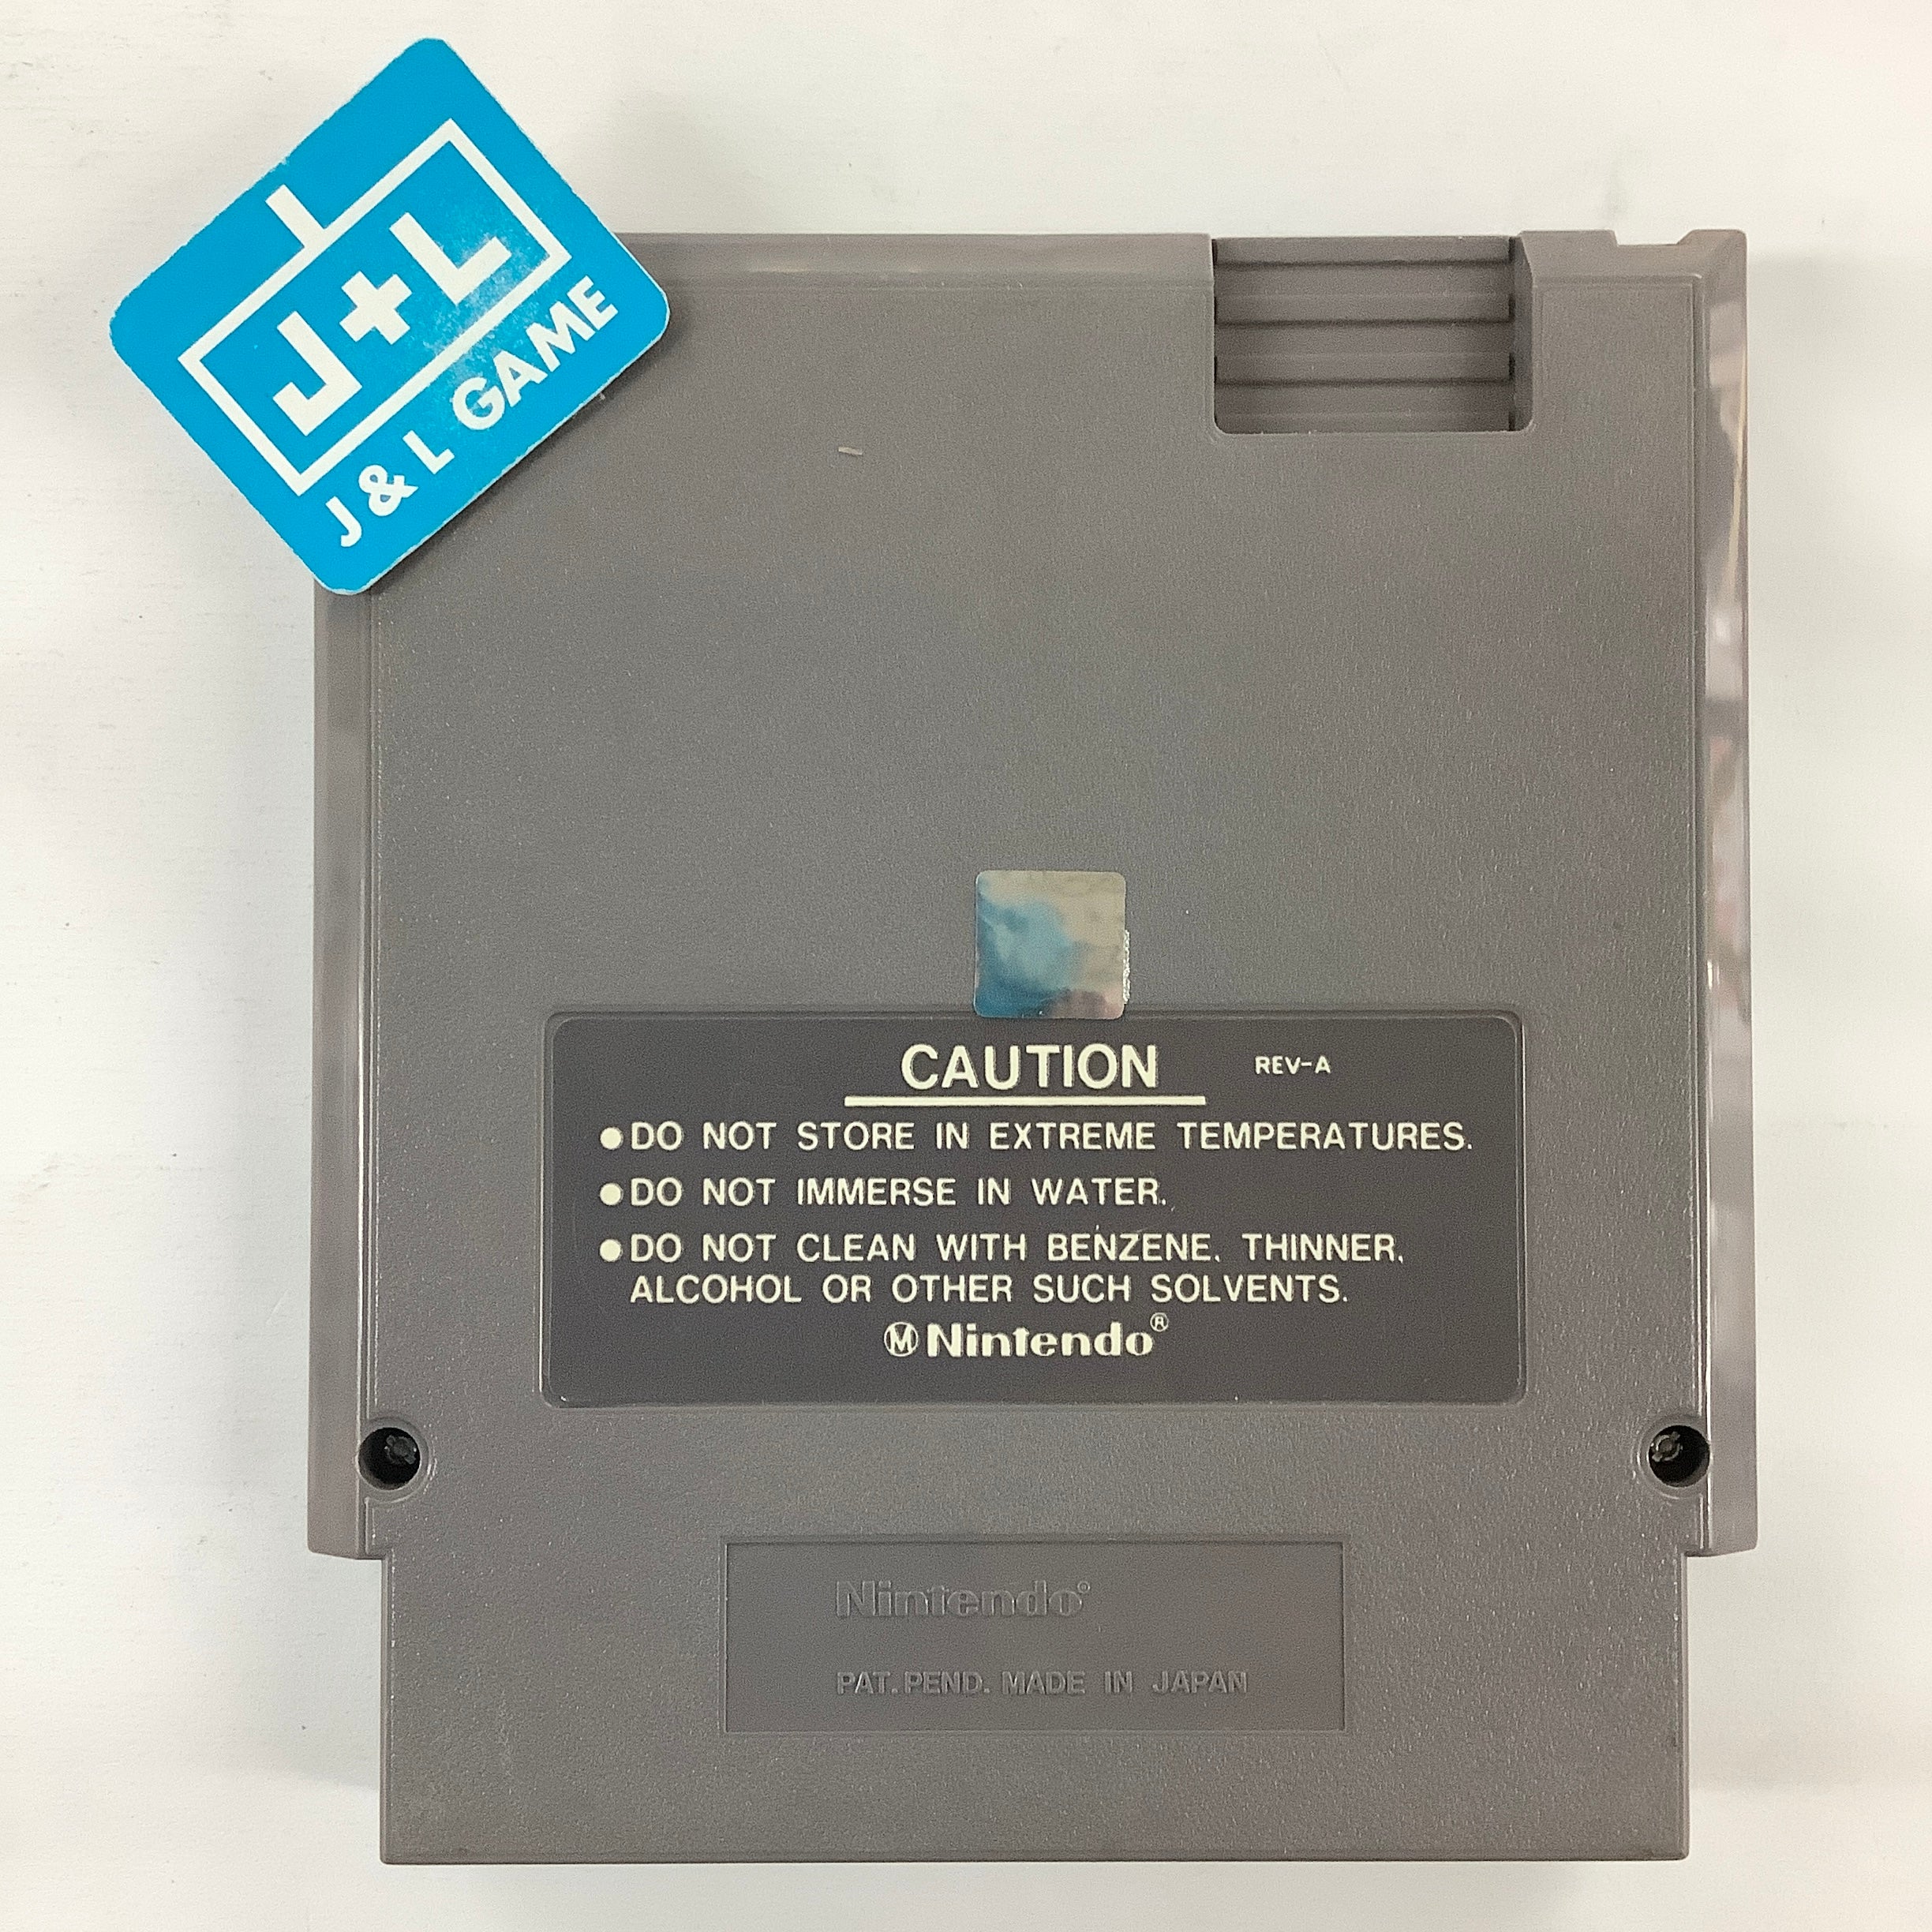 Karnov - (NES) Nintendo Entertainment System [Pre-Owned] Video Games Data East   